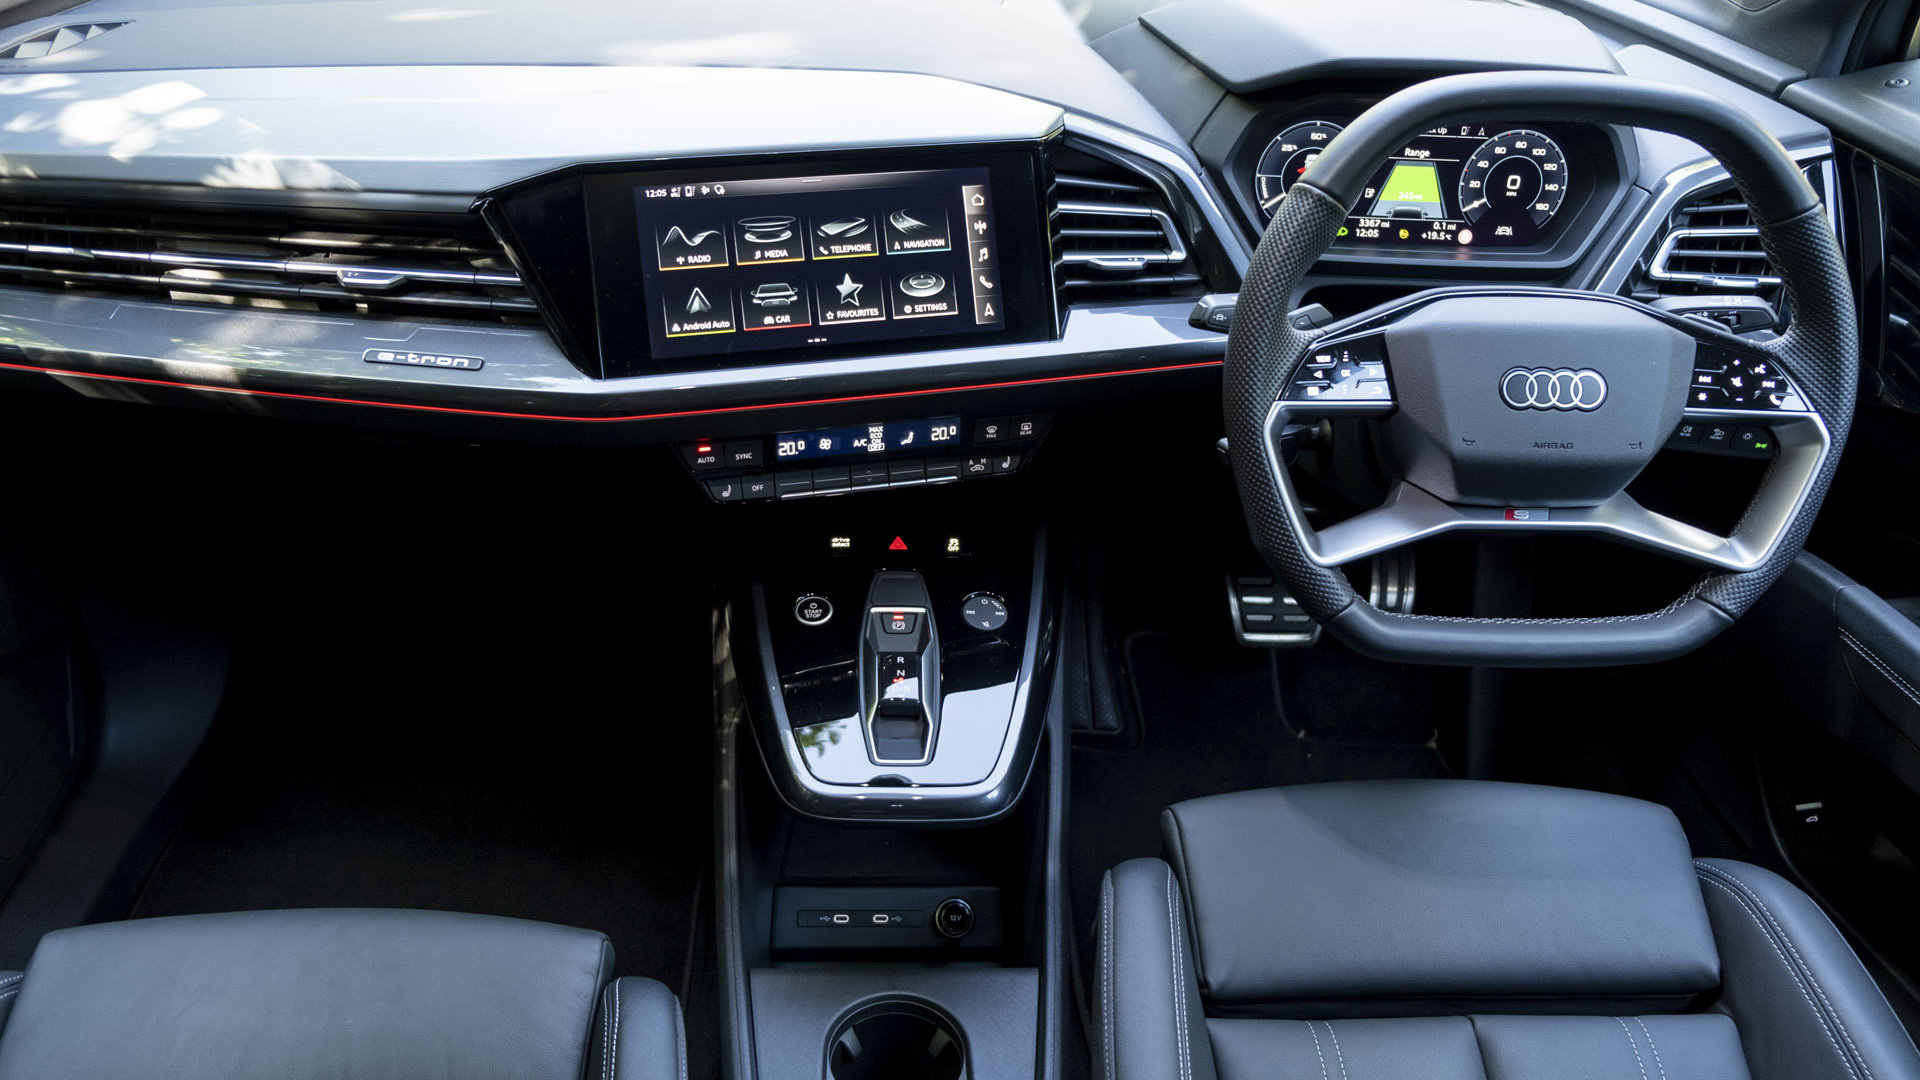 Audi Q4 e-tron interior design